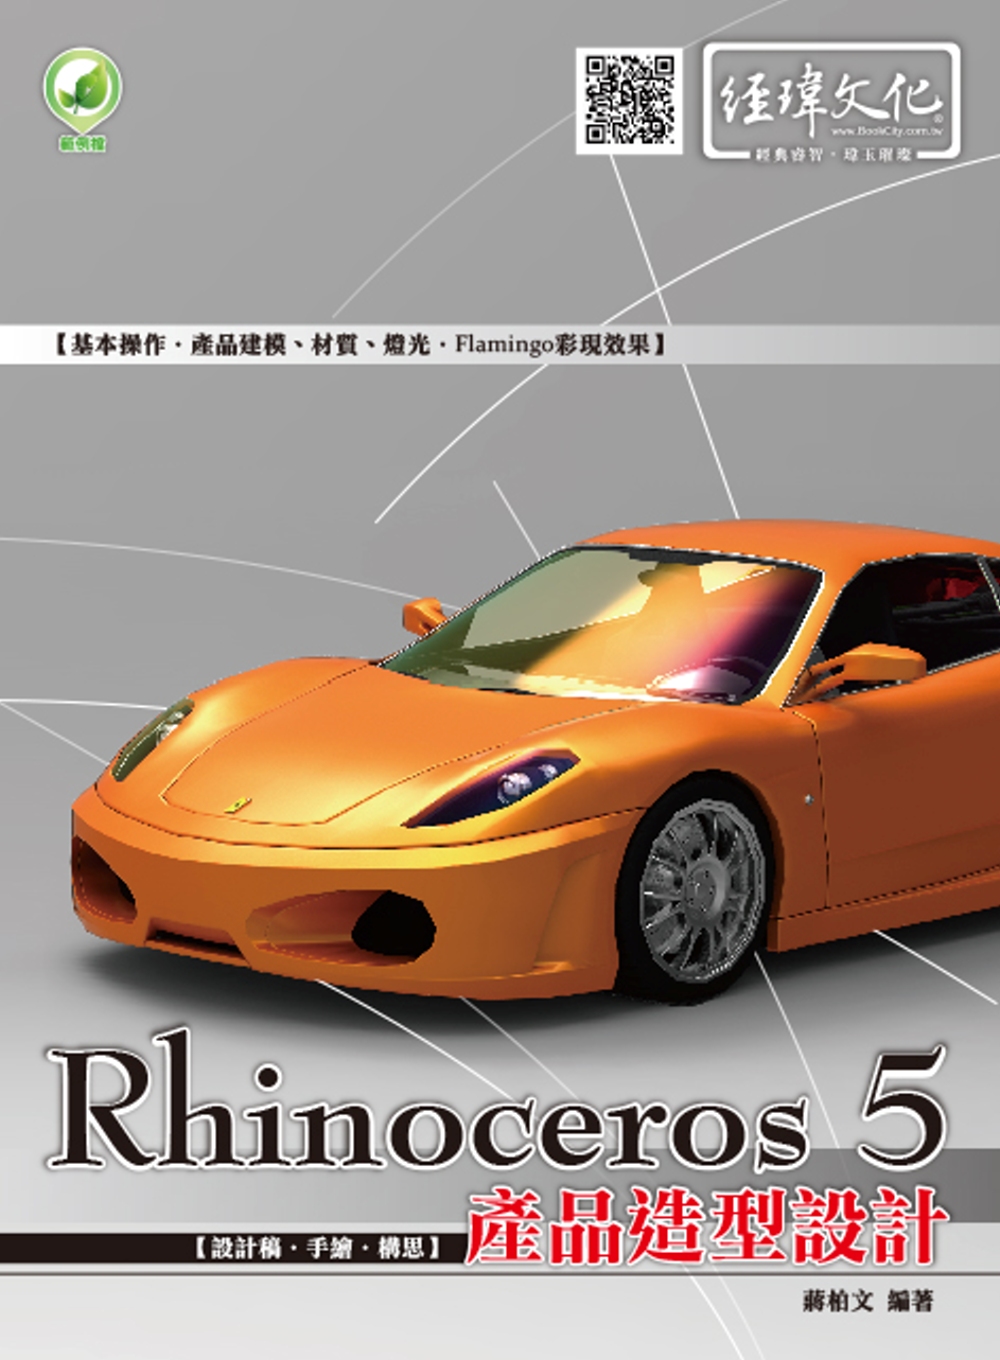 Rhinoceros 5 產品造...